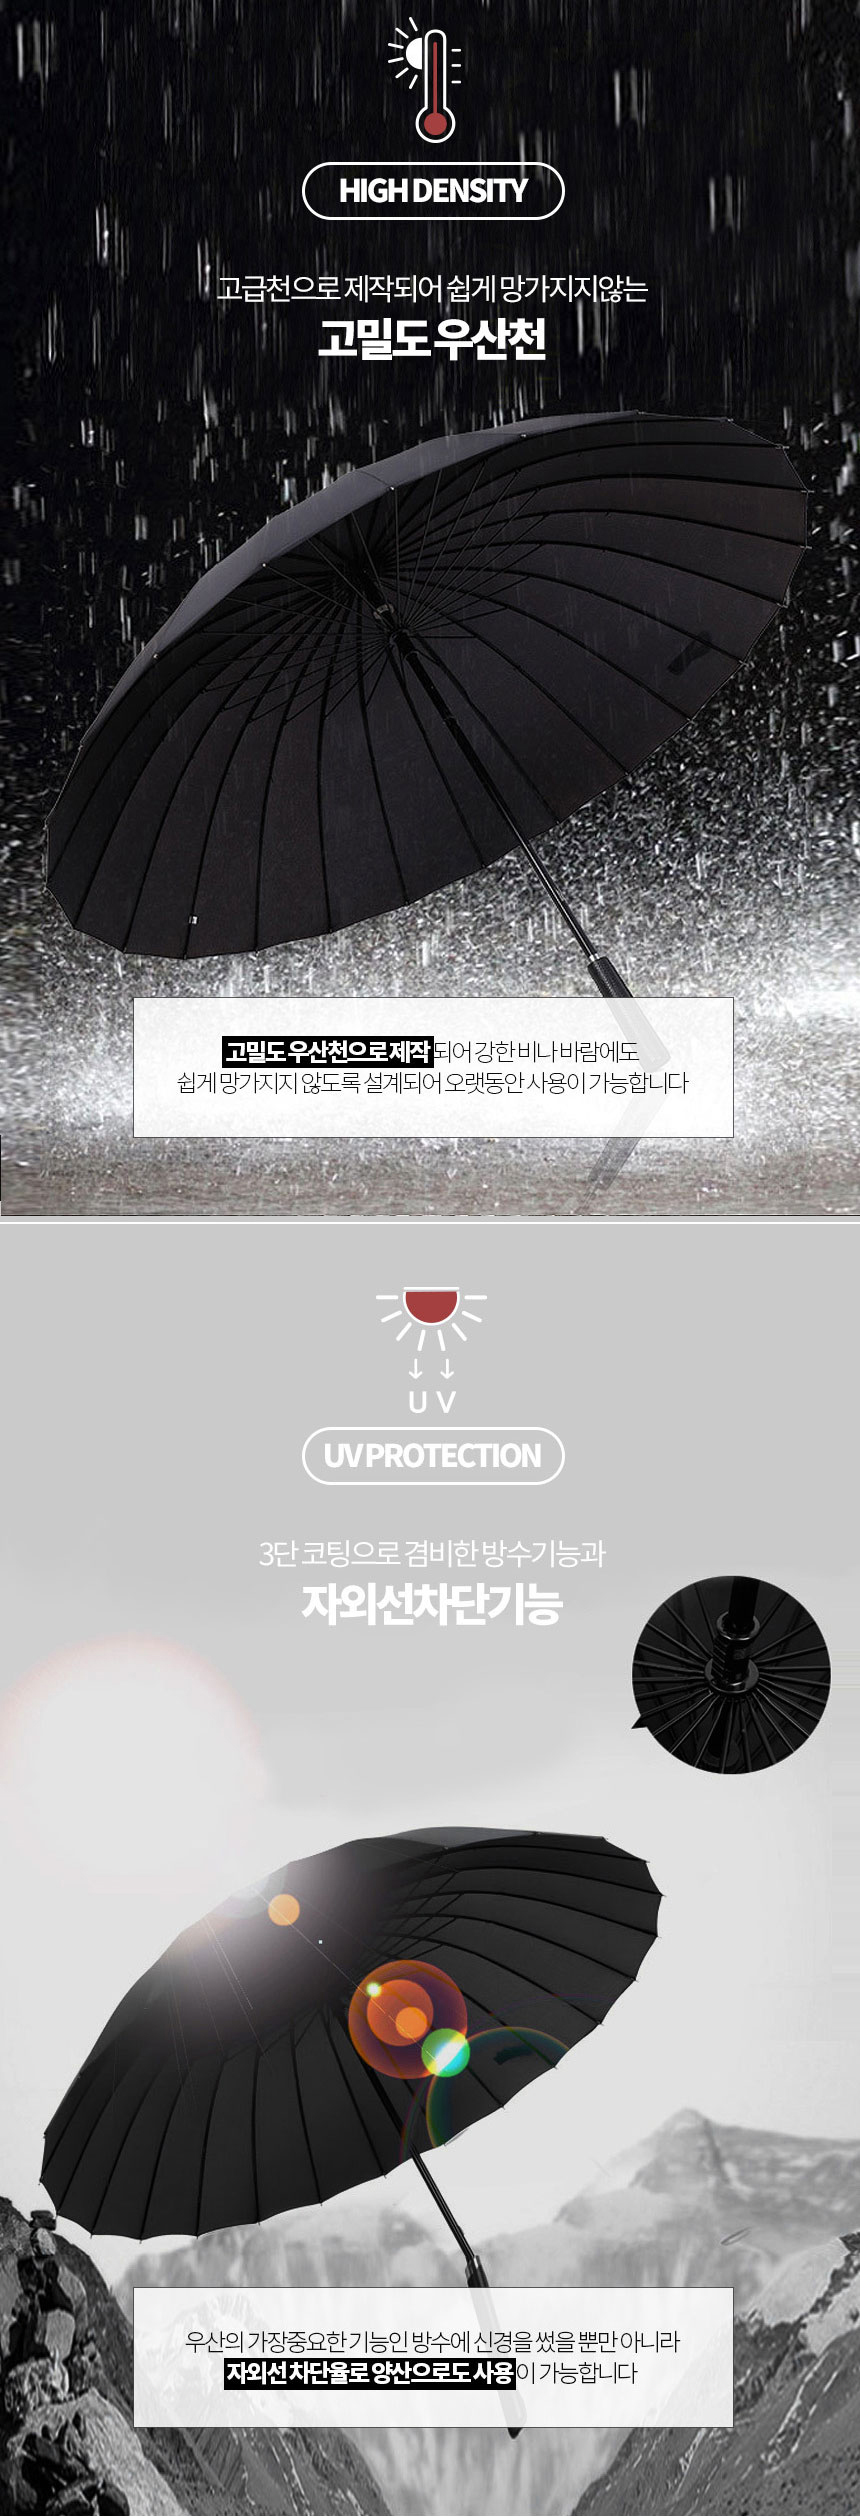 long_umbrella_detail_05.jpg